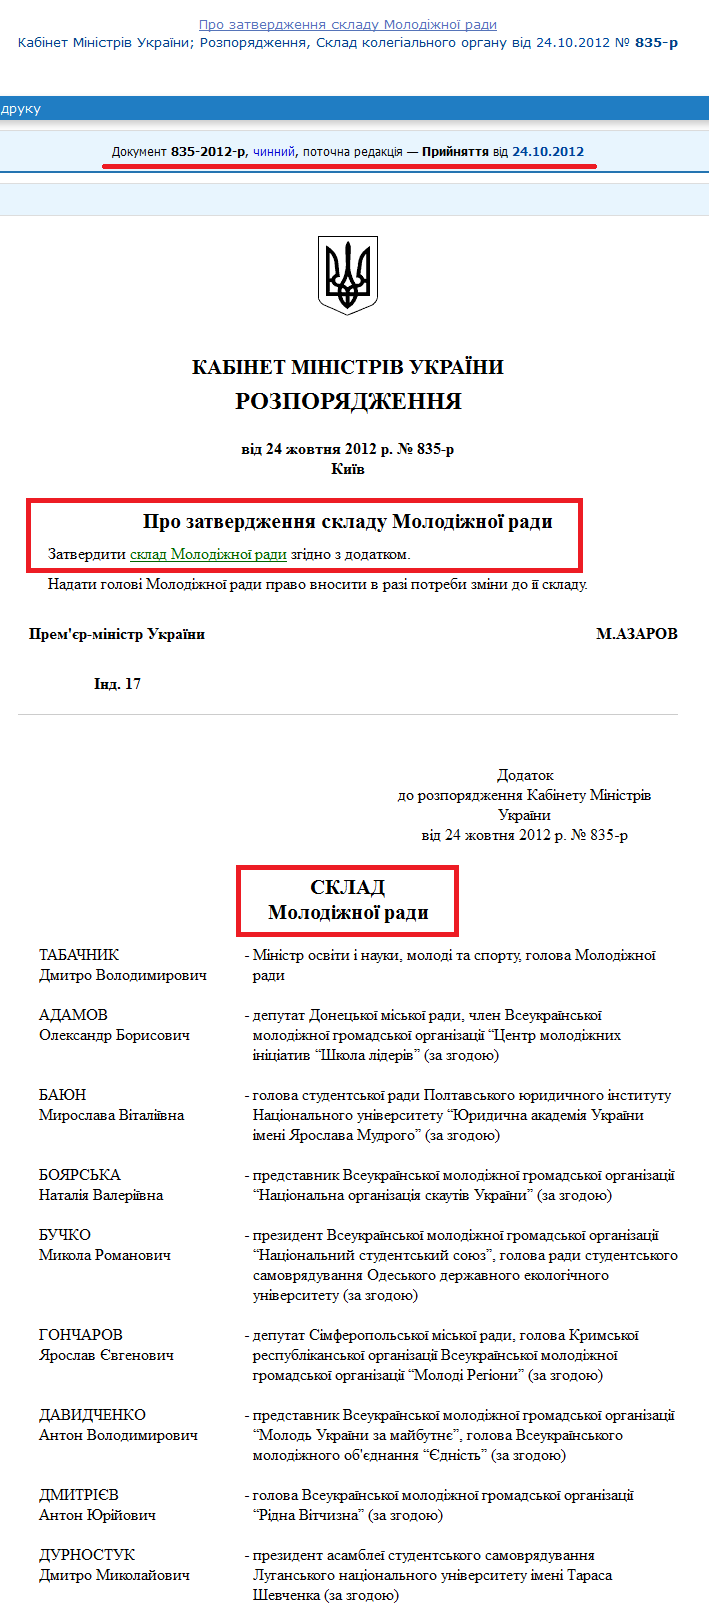 http://zakon4.rada.gov.ua/laws/card/673-2012-%D0%BF